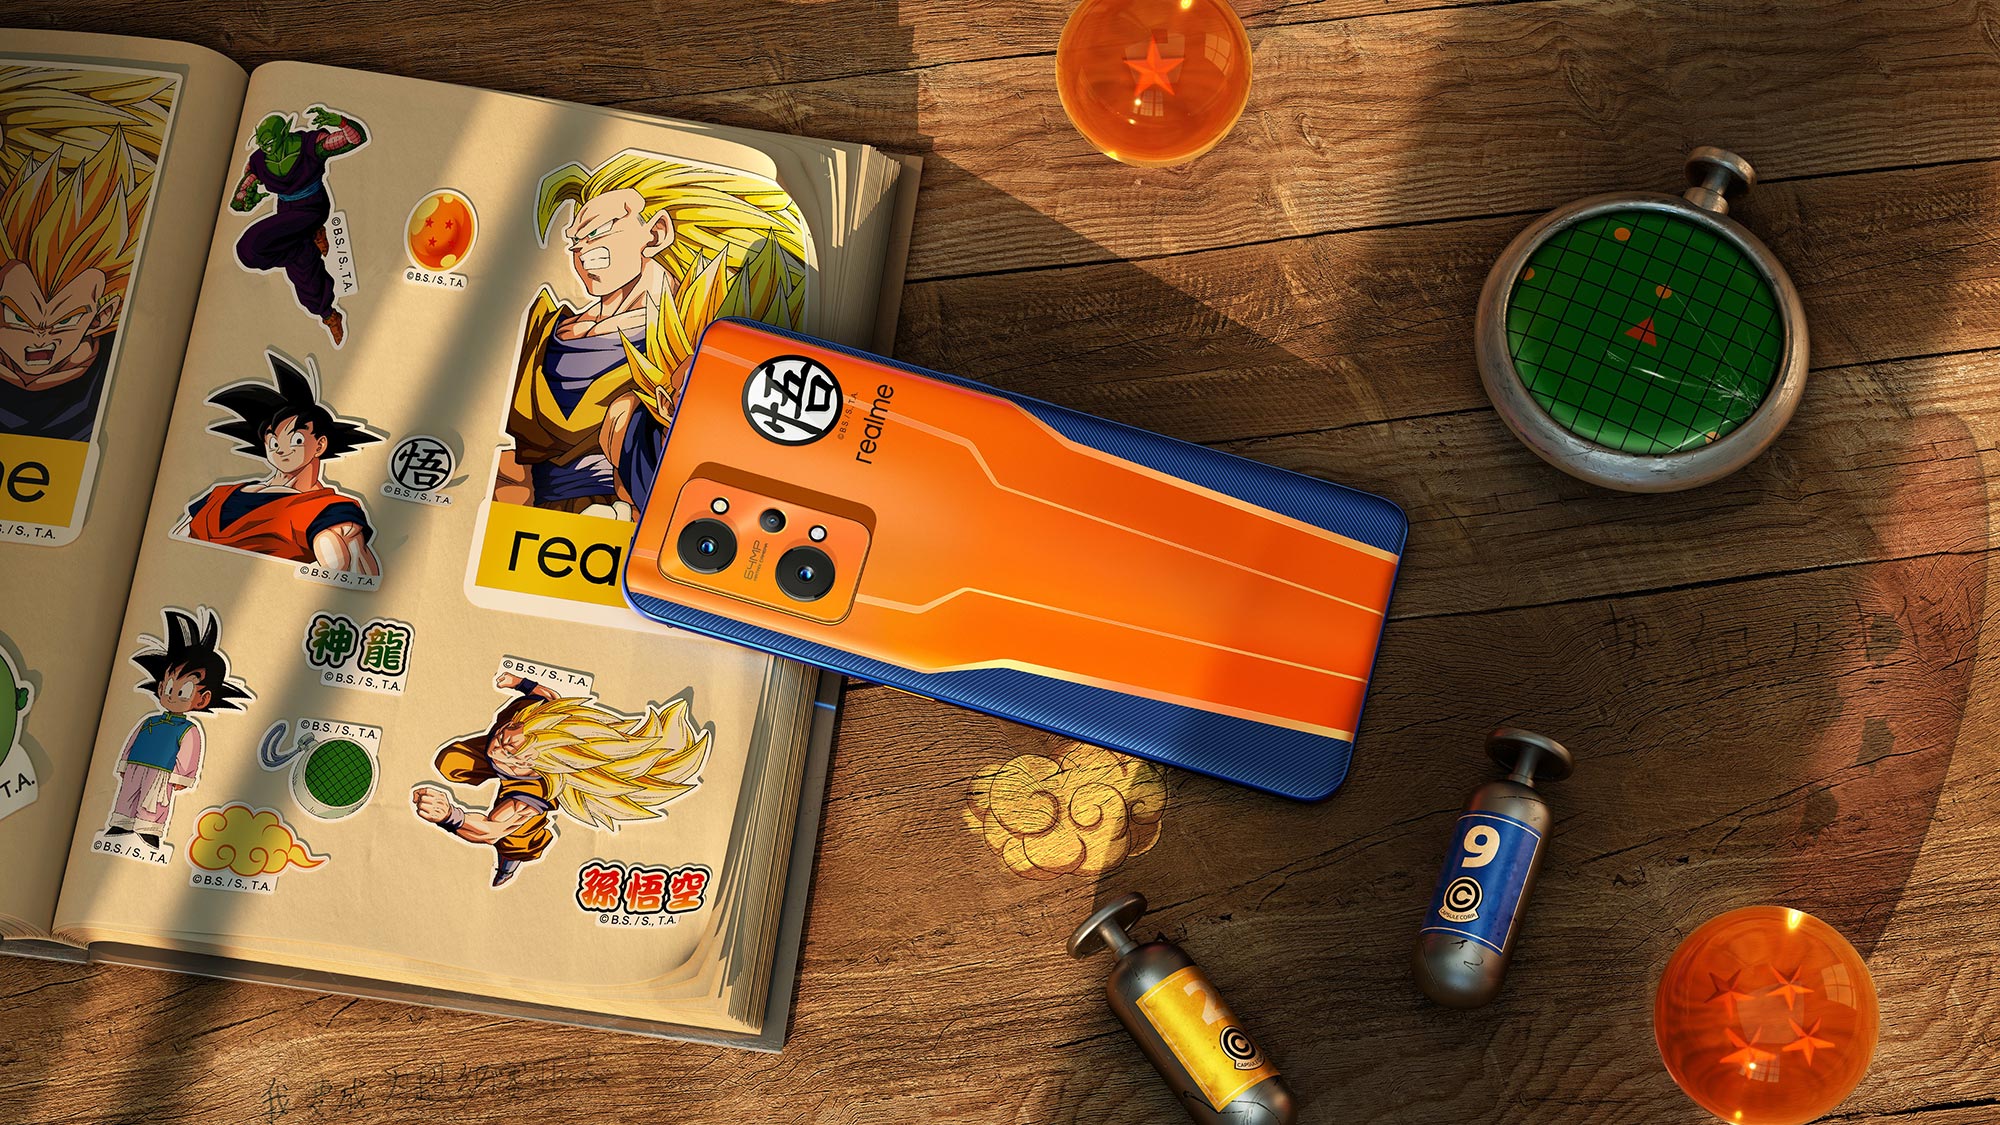 Unboxing du smartphone Dragon Ball Z officiel : Realme GT NEO 3T